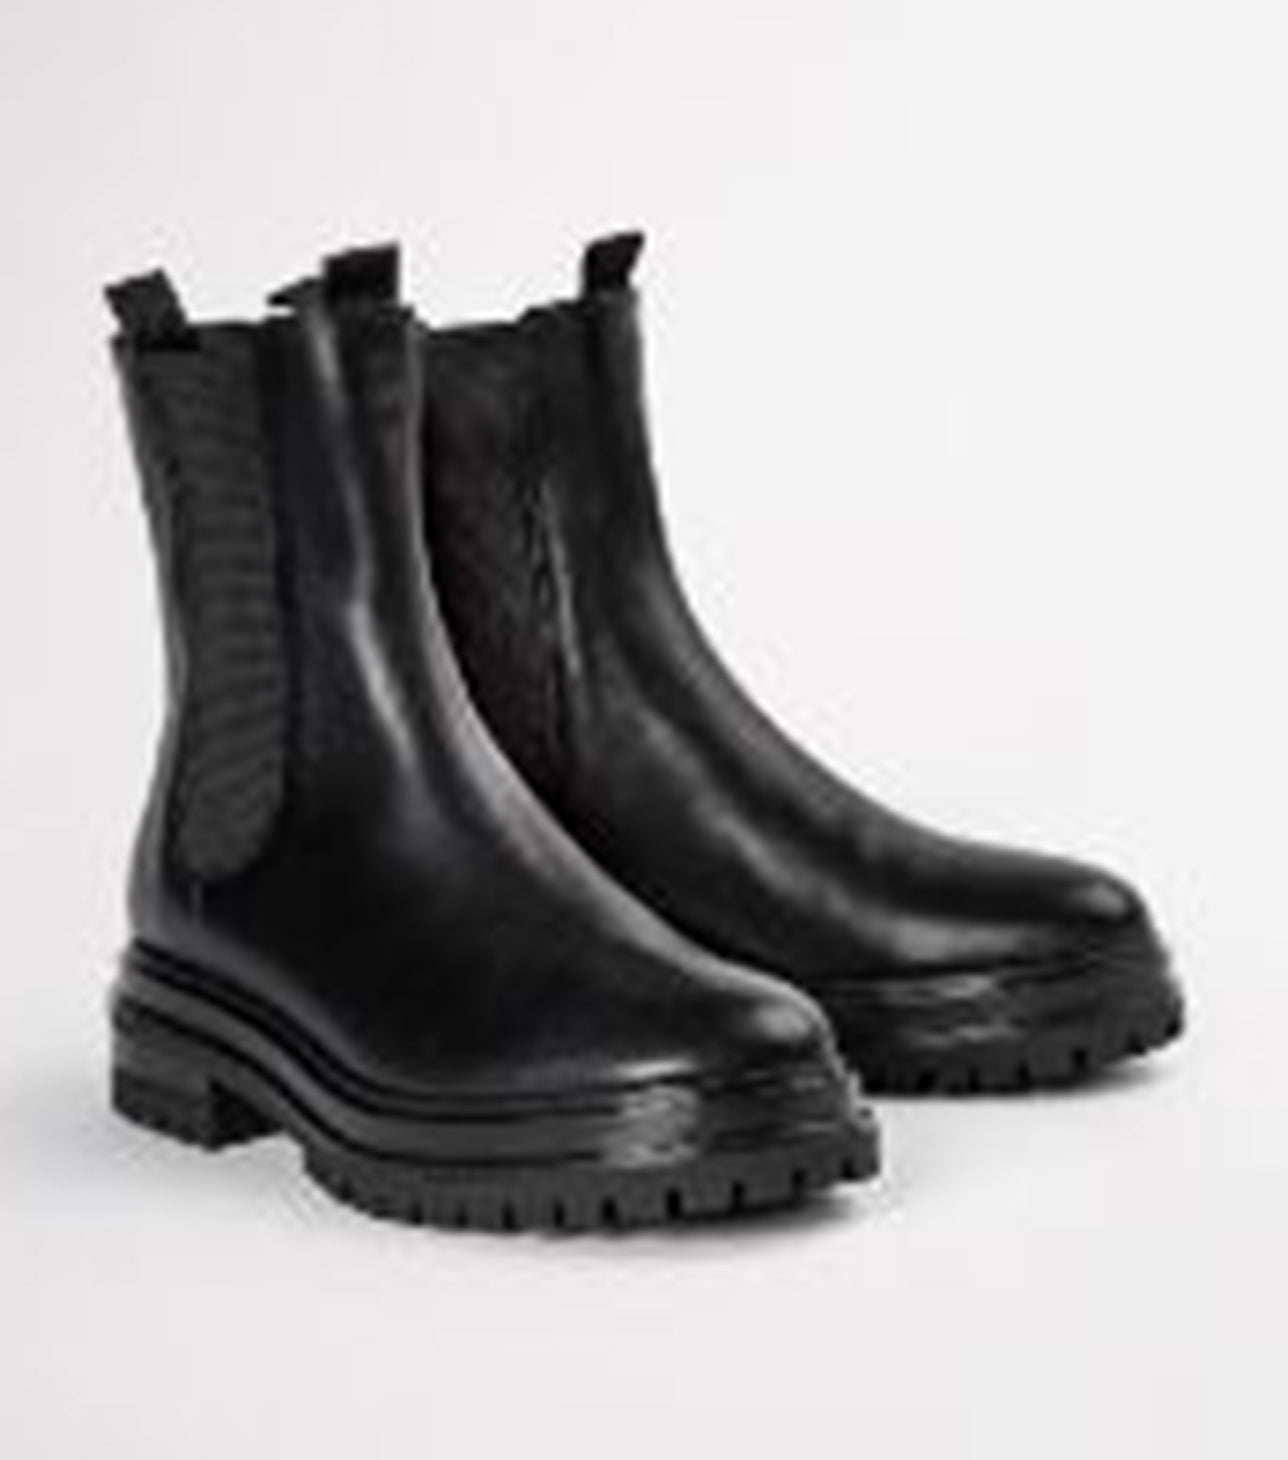 Wolfe Black Como Ankle Boots | Boots | Tony Bianco USA | Tony